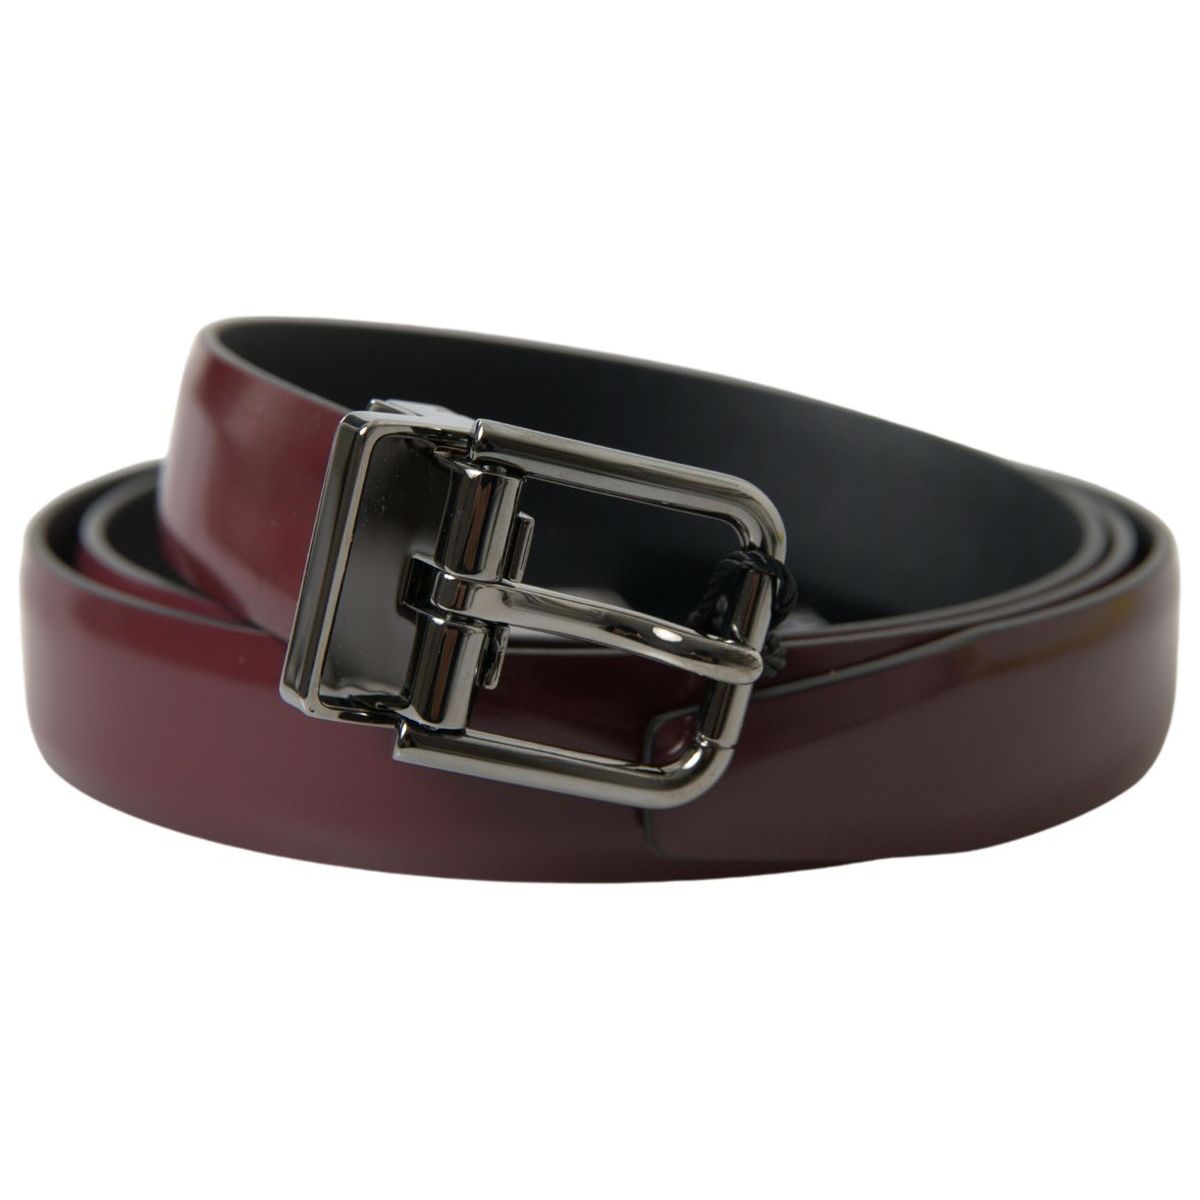 Dolce & Gabbana Elegant Bordeaux Leather Belt with Metal Buckle bordeaux-leather-silver-metal-buckle-belt 465A5143-scaled-850c1e15-bf0.jpg